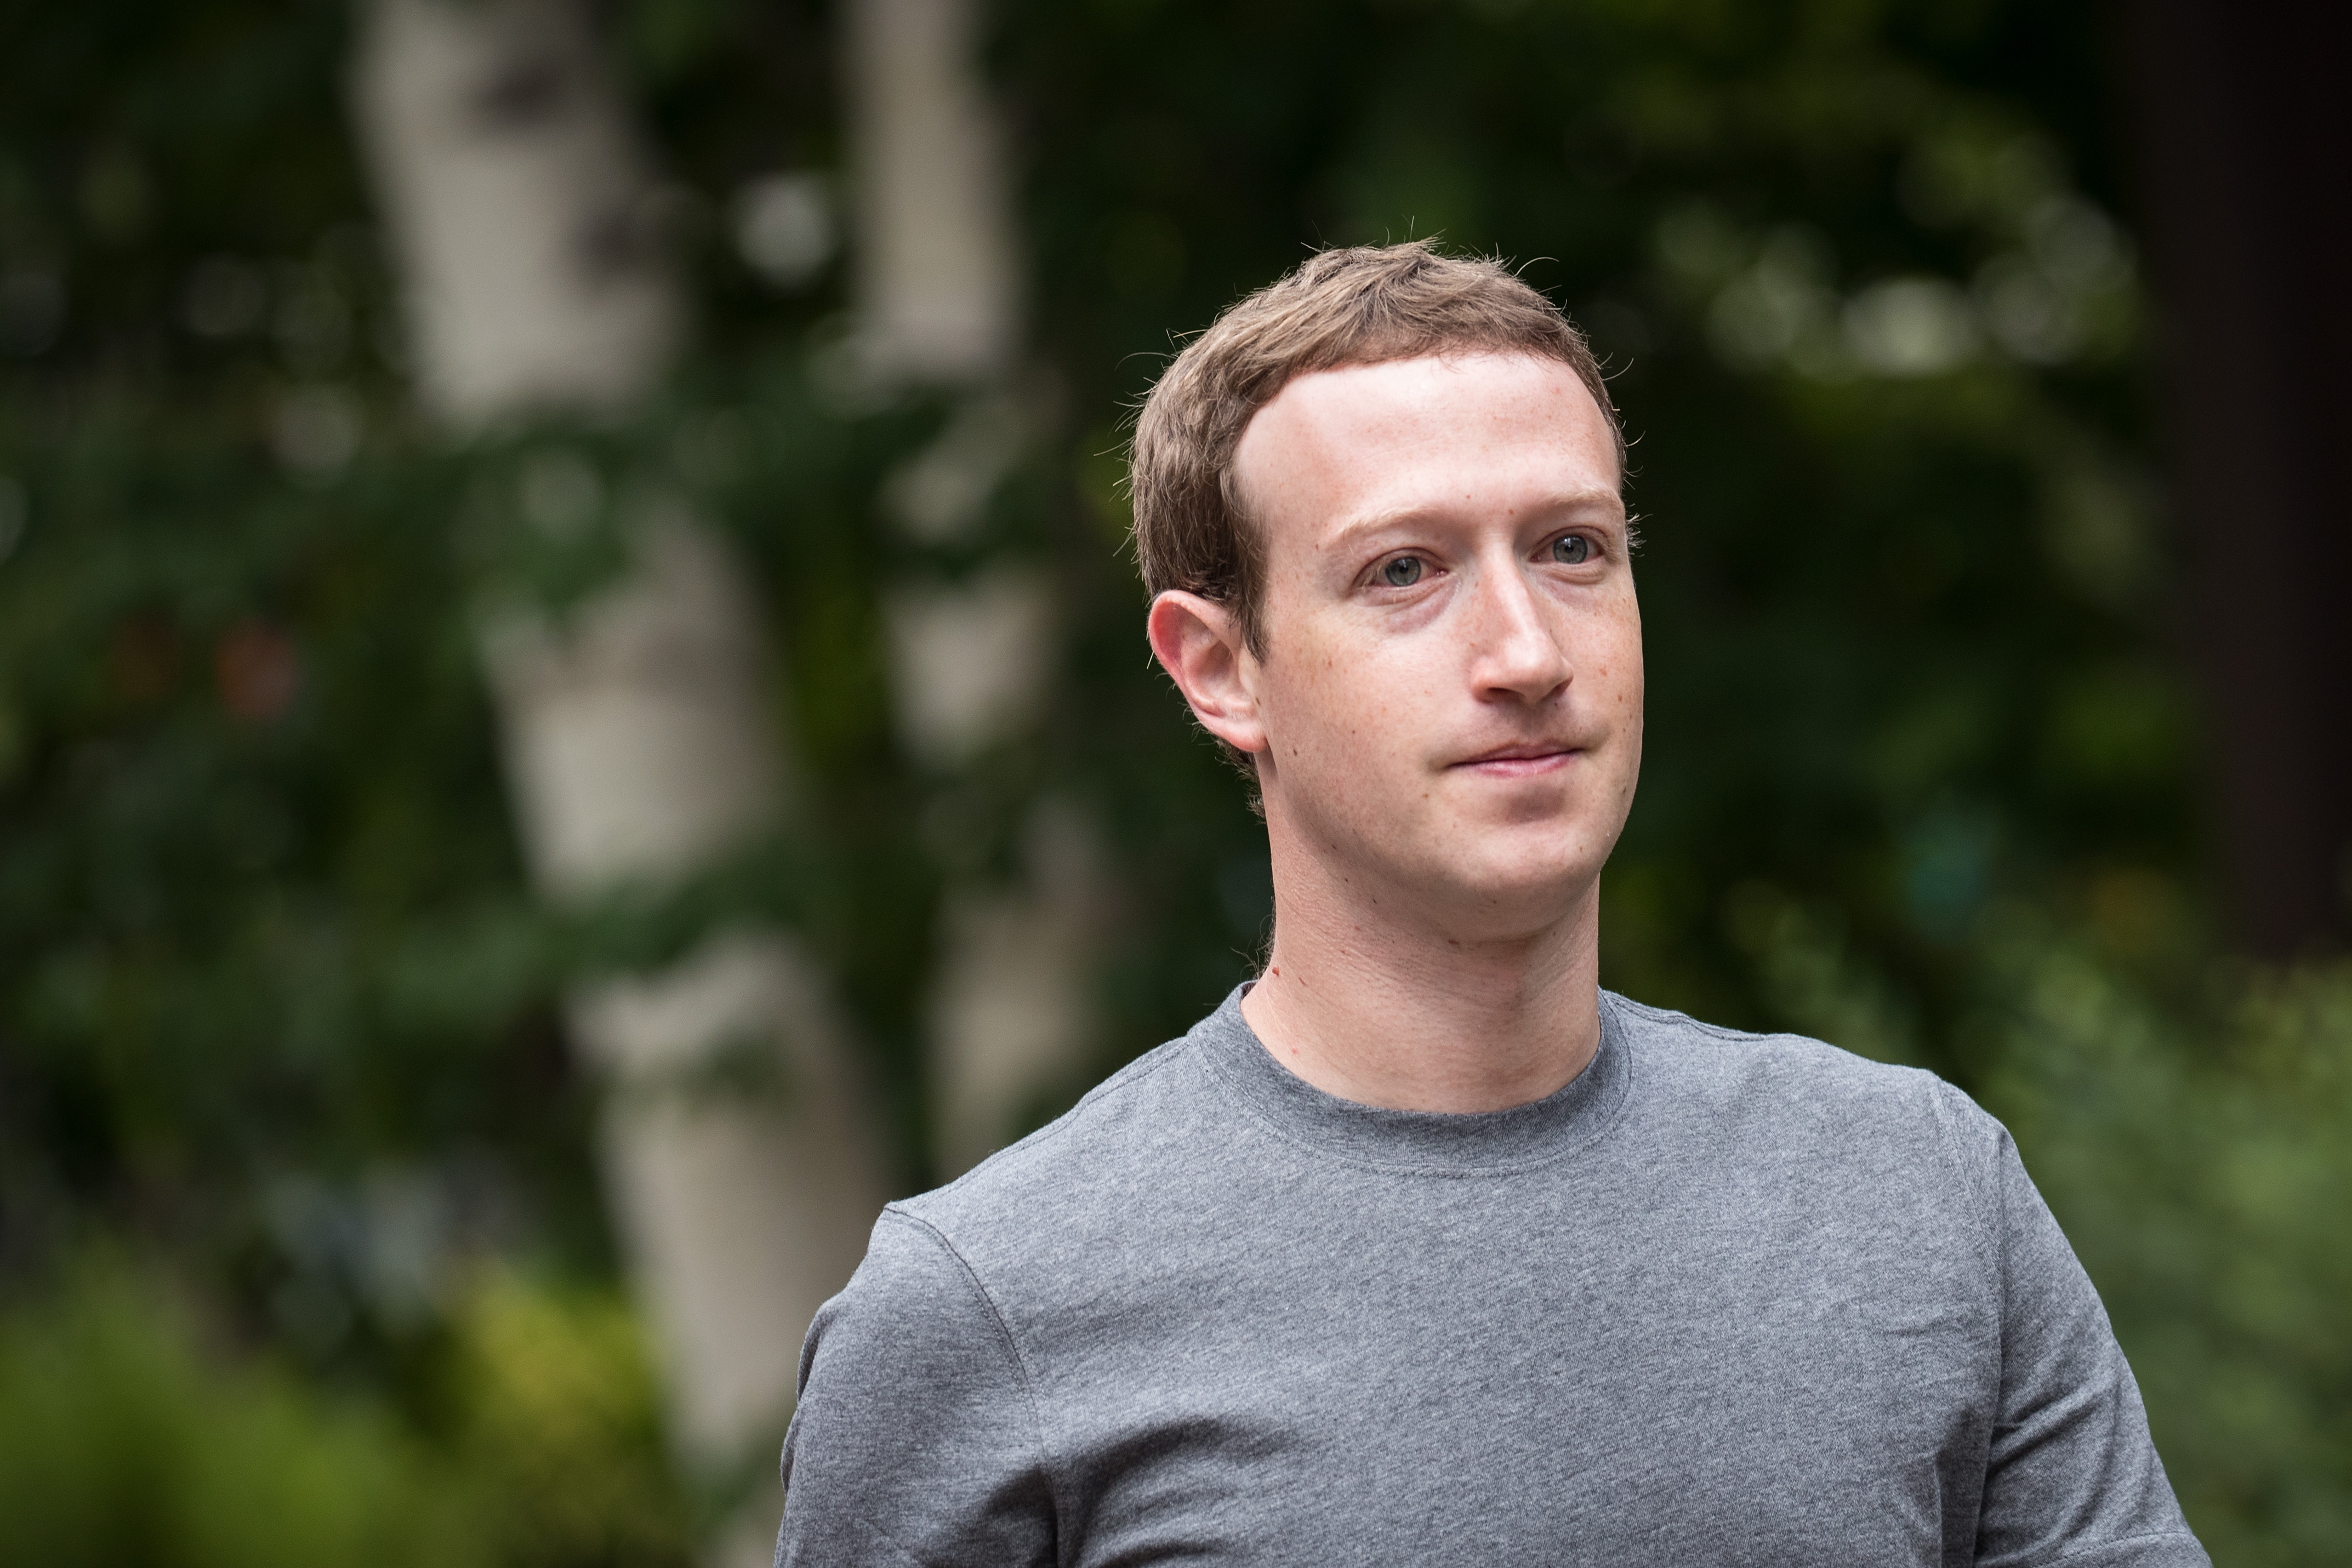 The Latest Change in Facebook's Feed Just Cost Mark Zuckerberg $2.9 Billion